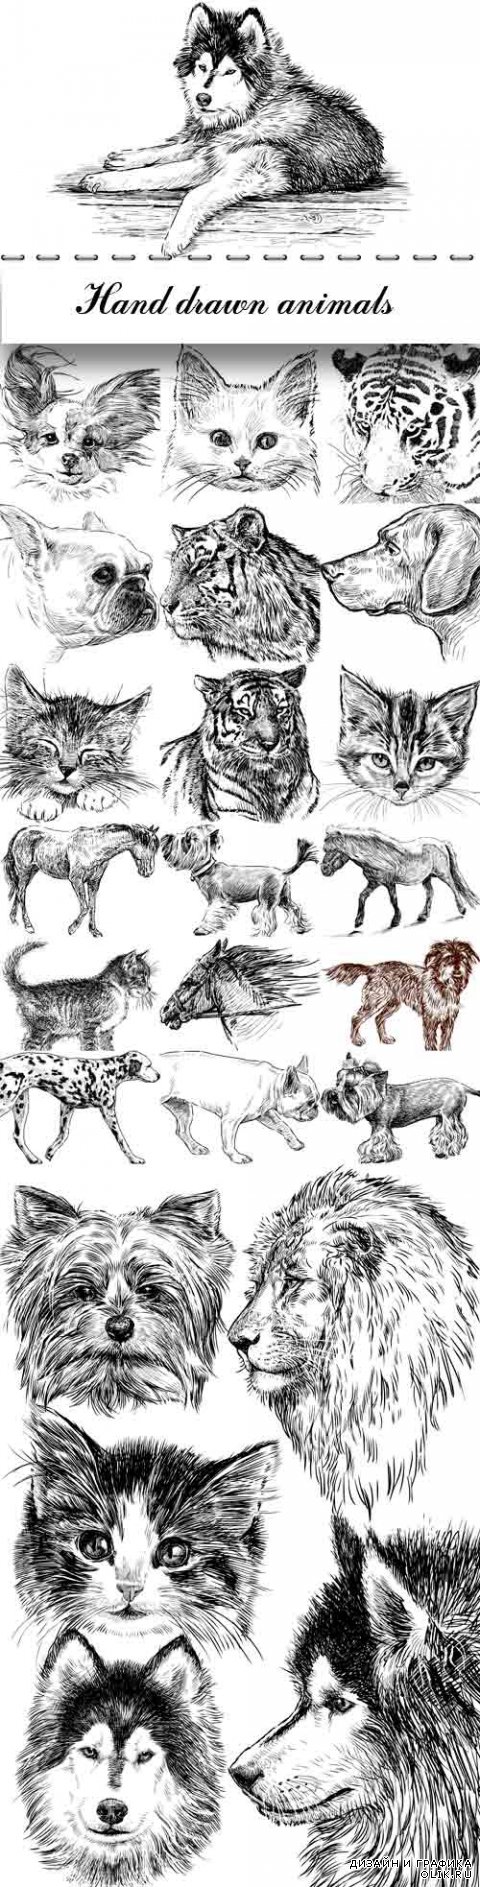 Hand drawn animals vector set